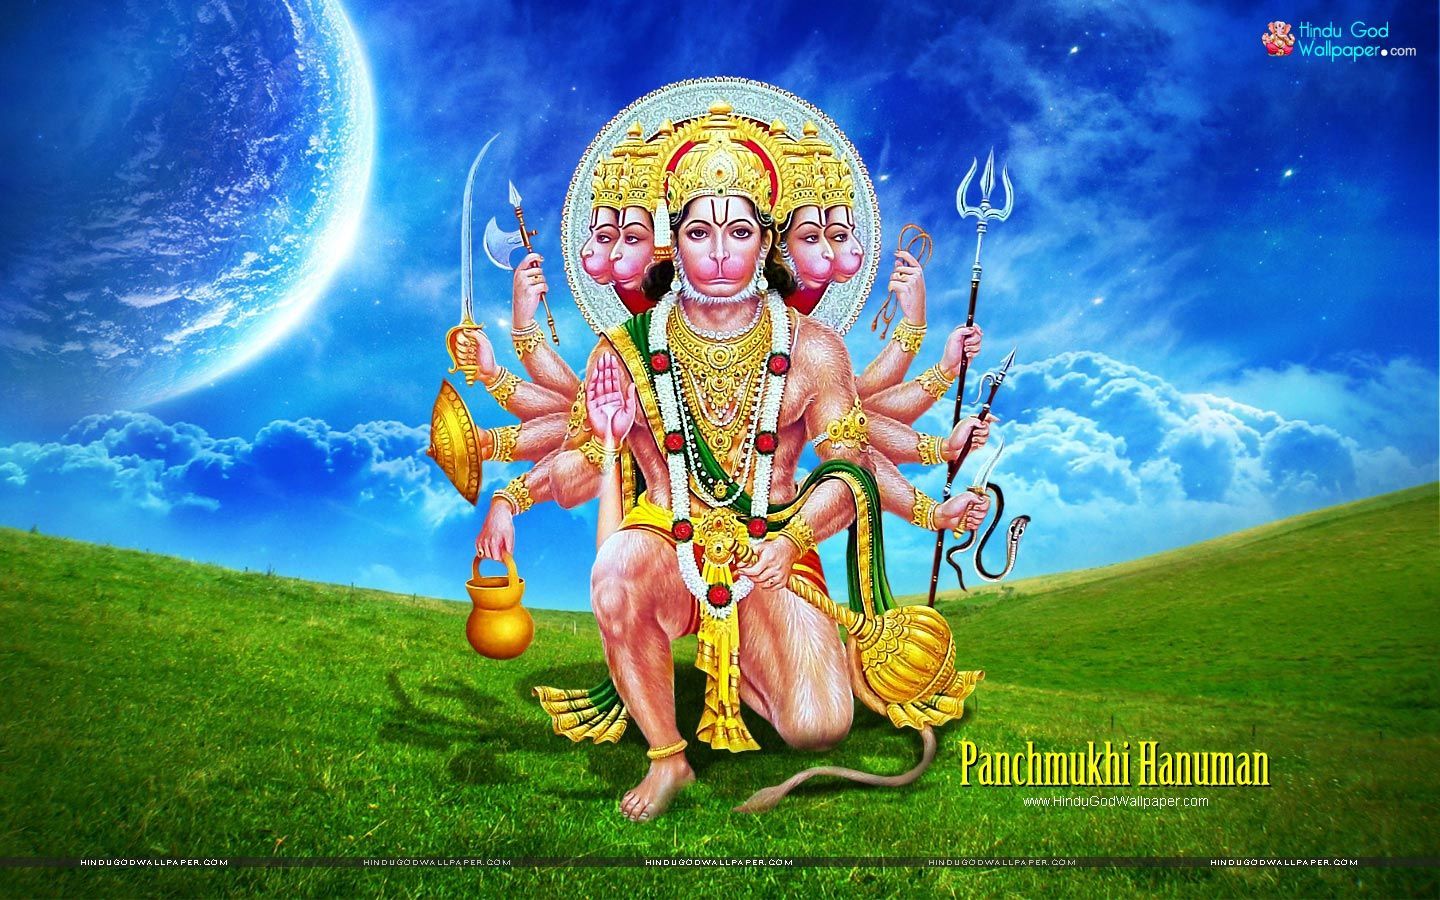 Beautiful Sri Panchmukhi Hanuman wallpaper free download with HD